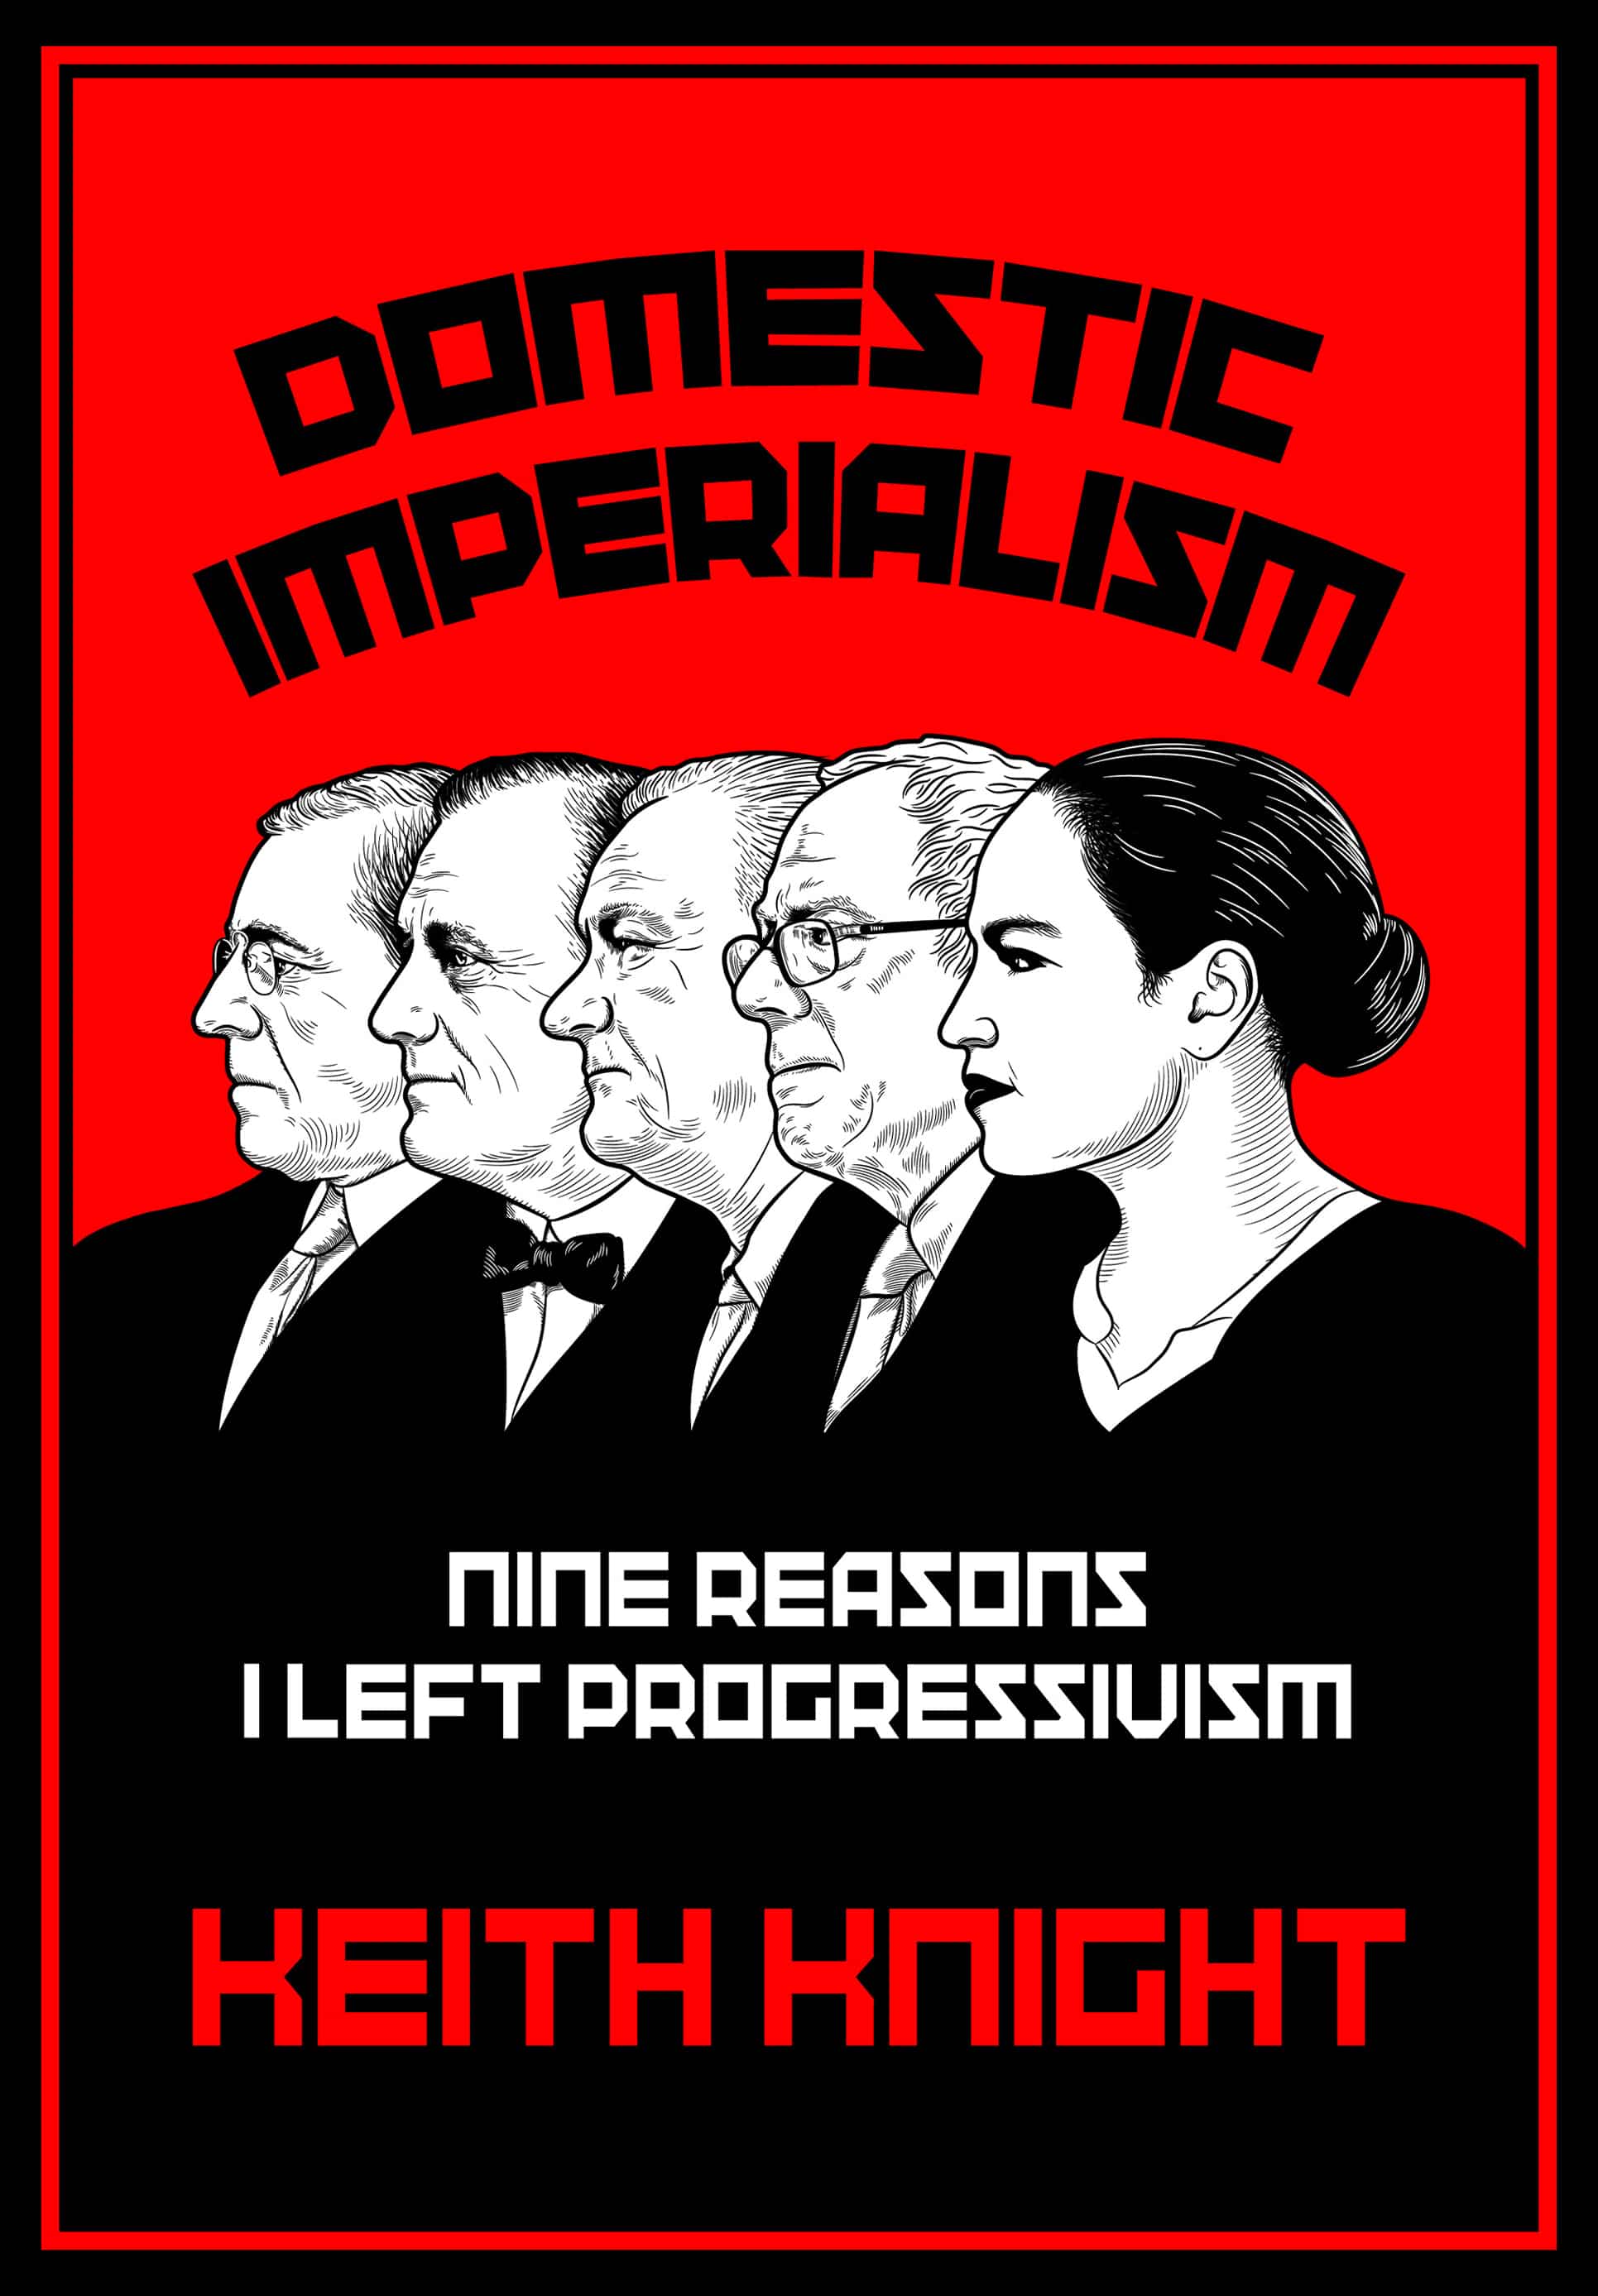 libertarianinstitute.org